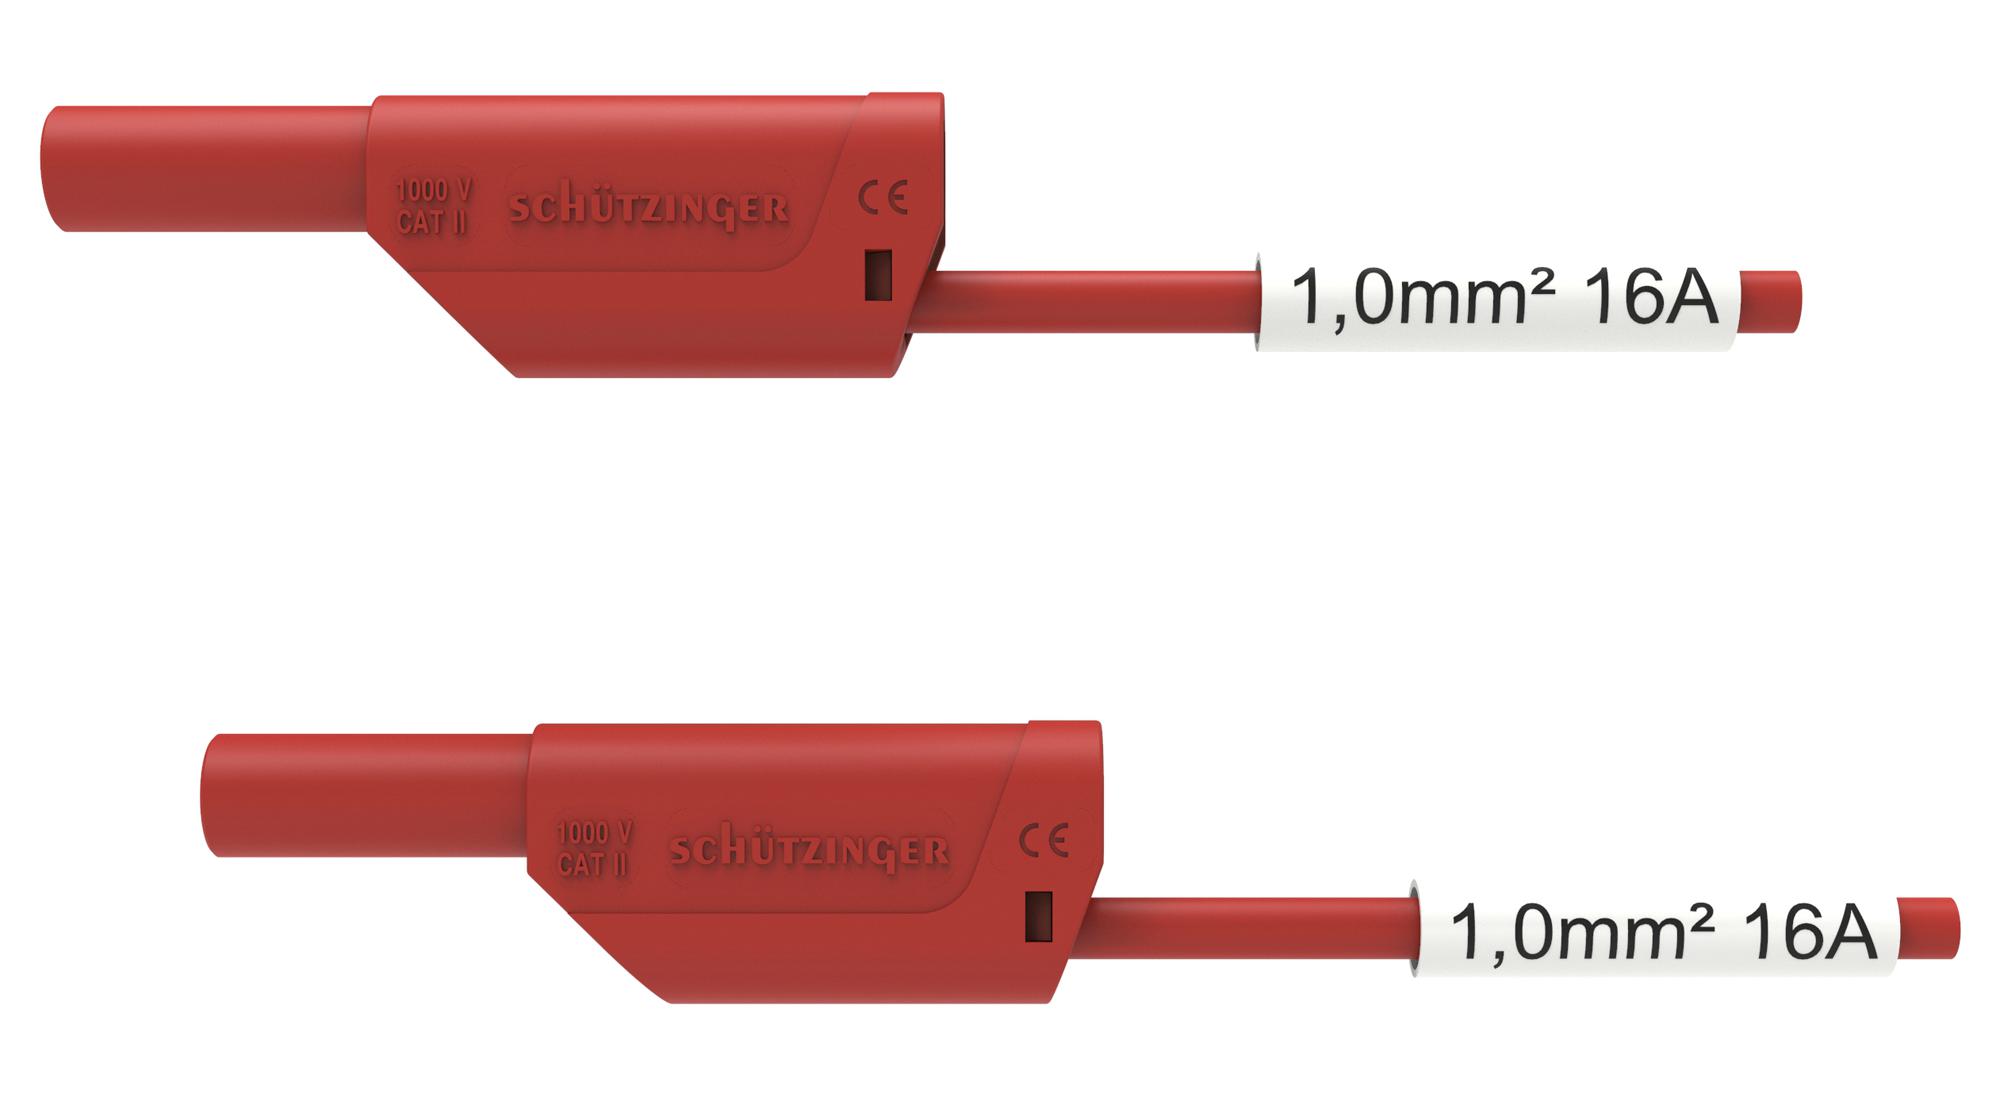 Schutzinger Di Vsfk 8500 / Sil 1 / 200 / Rt 4mm Banana Plug-Sq, Shrouded, Red, 2M